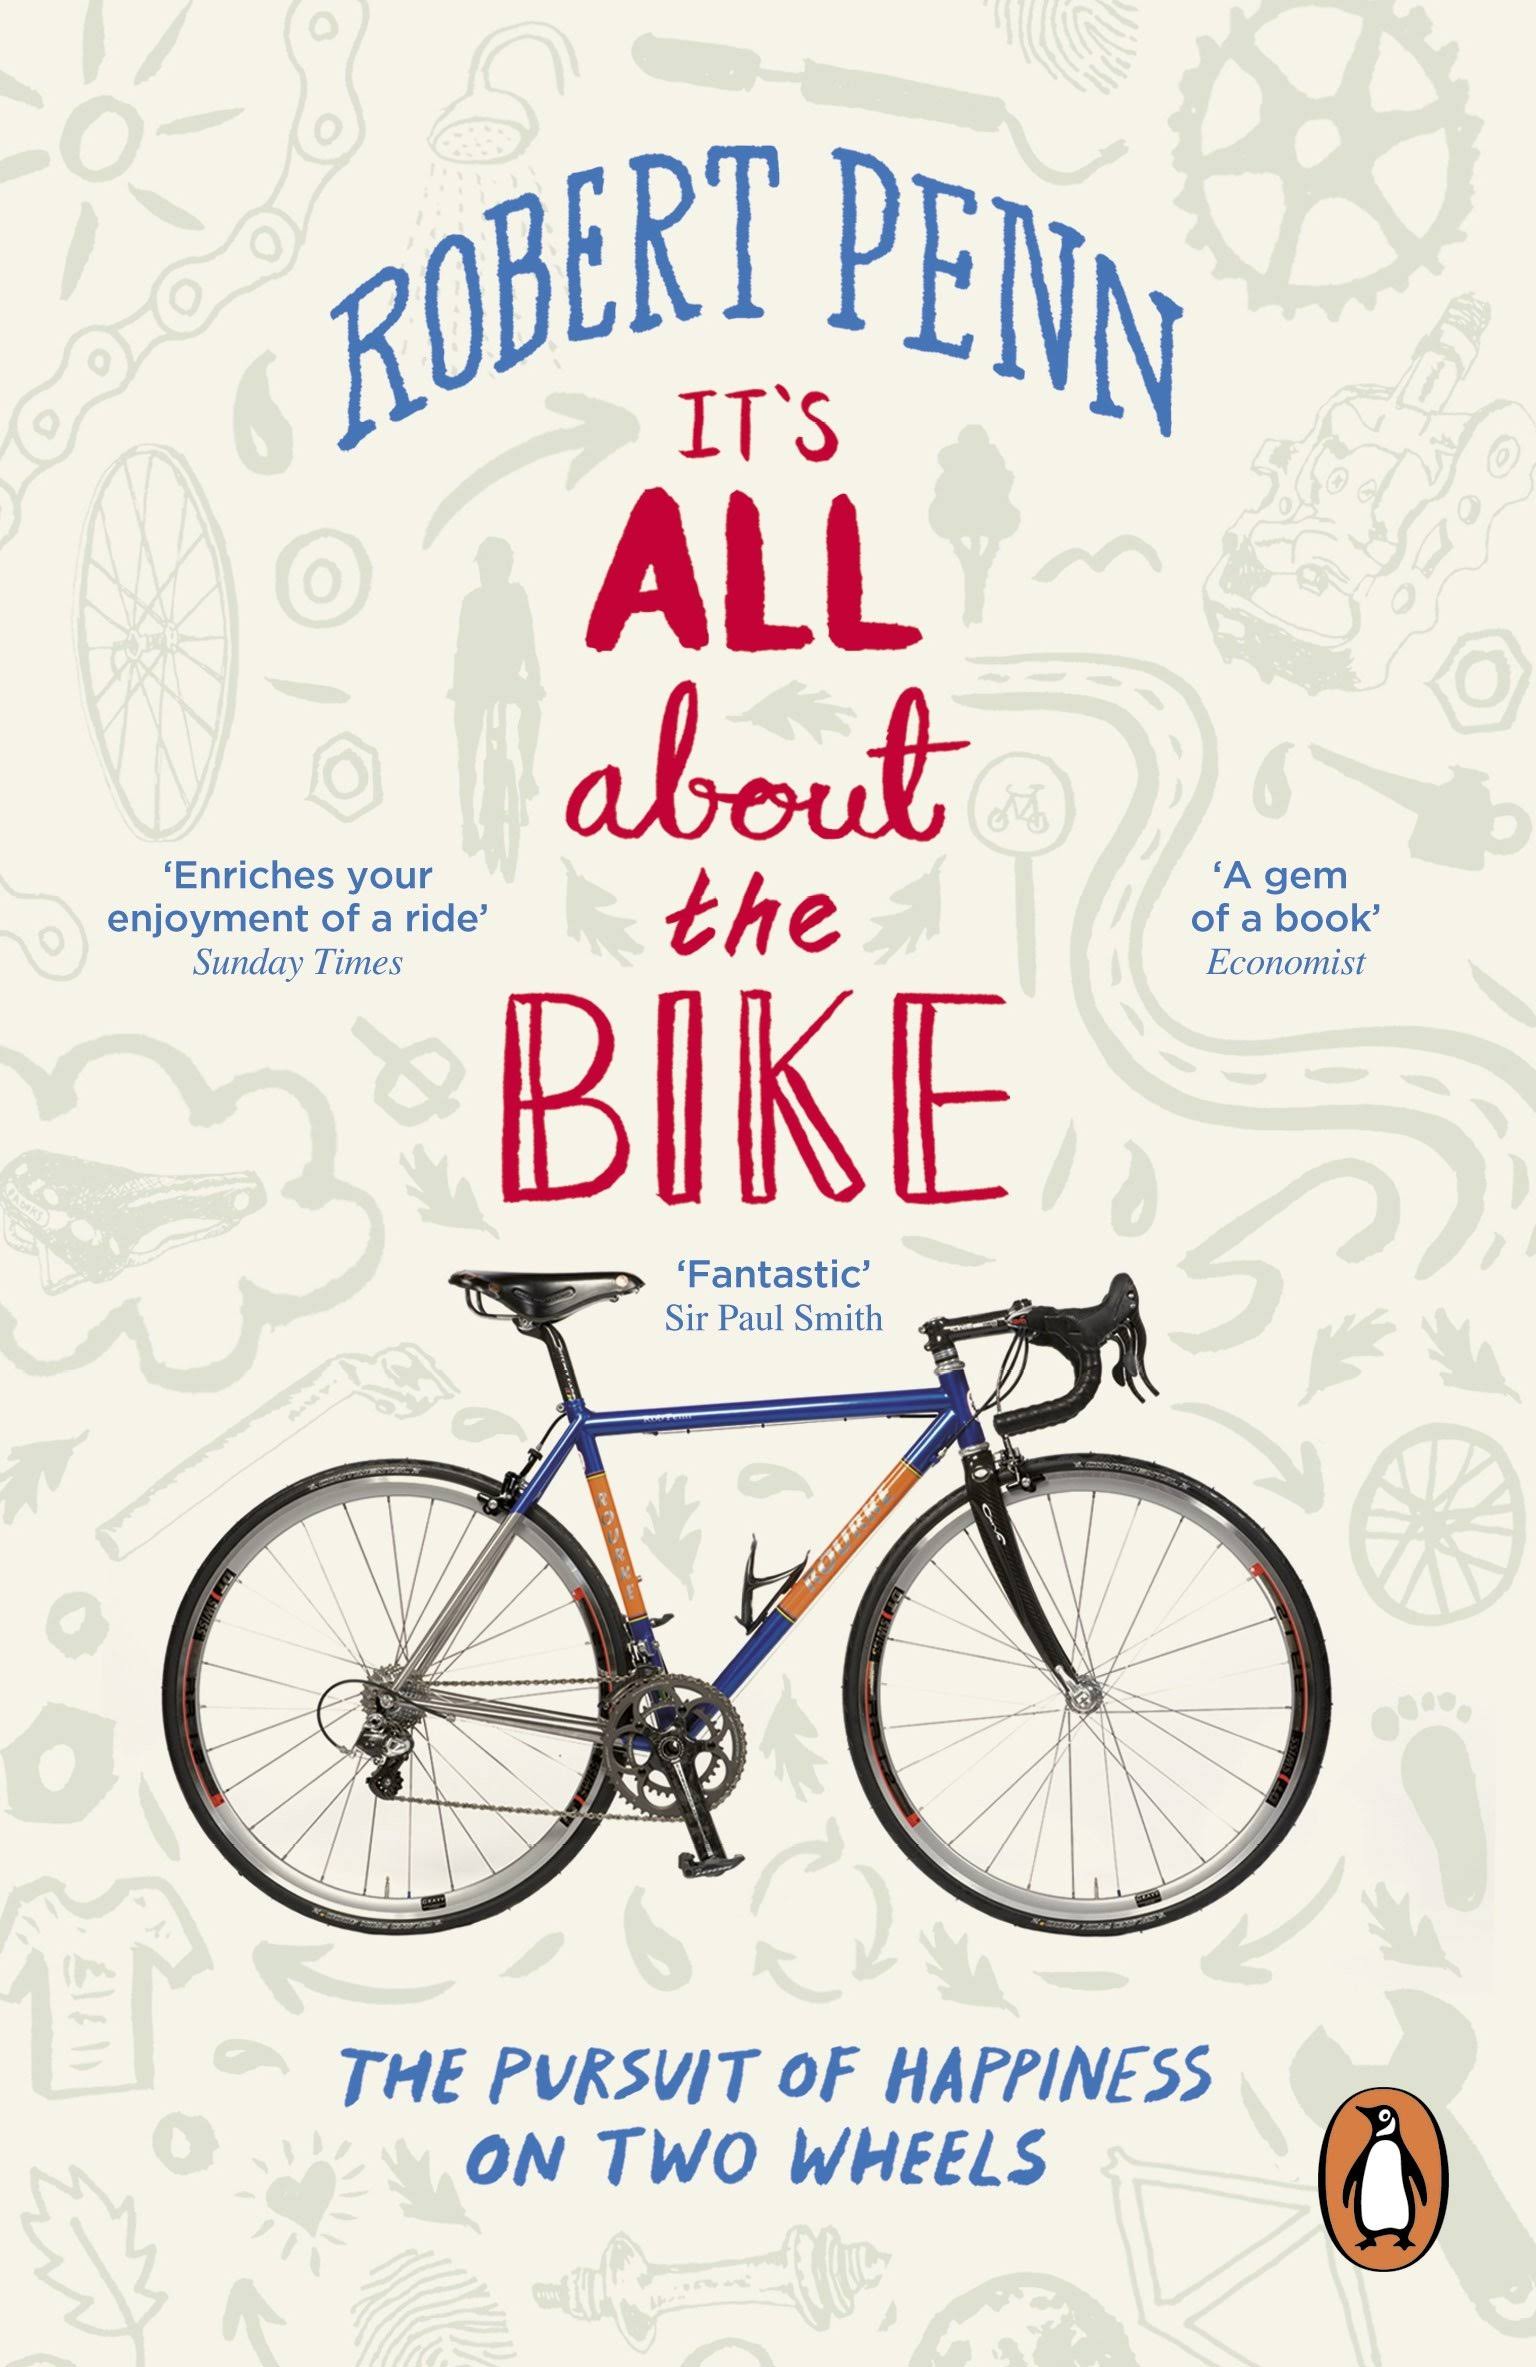 It's All About The Bike - Robert Penn